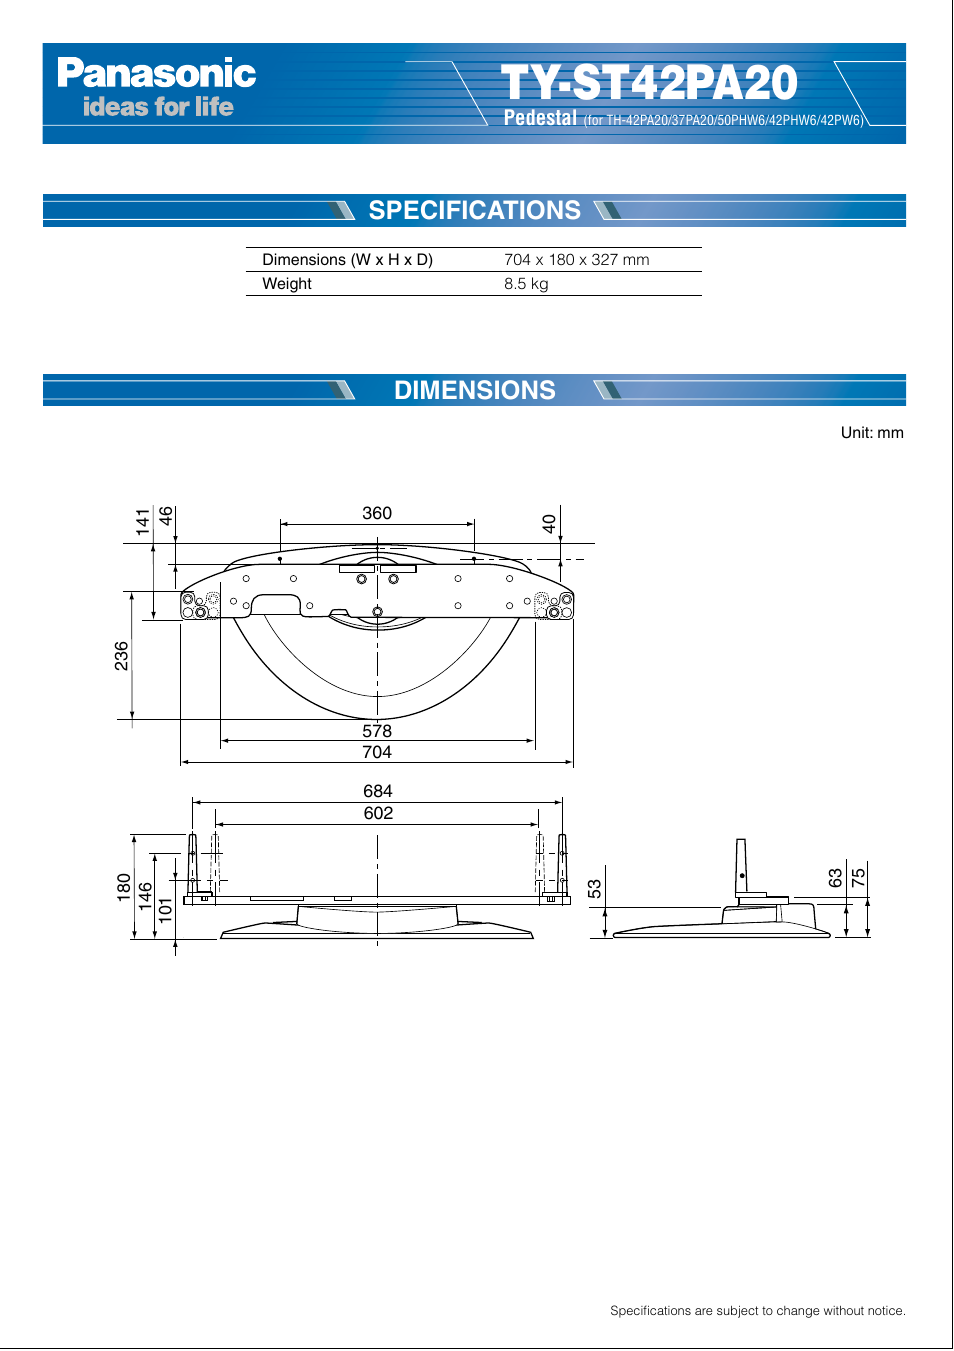 Panasonic Pedestal Stand TY-ST42PA20 User Manual | 1 page